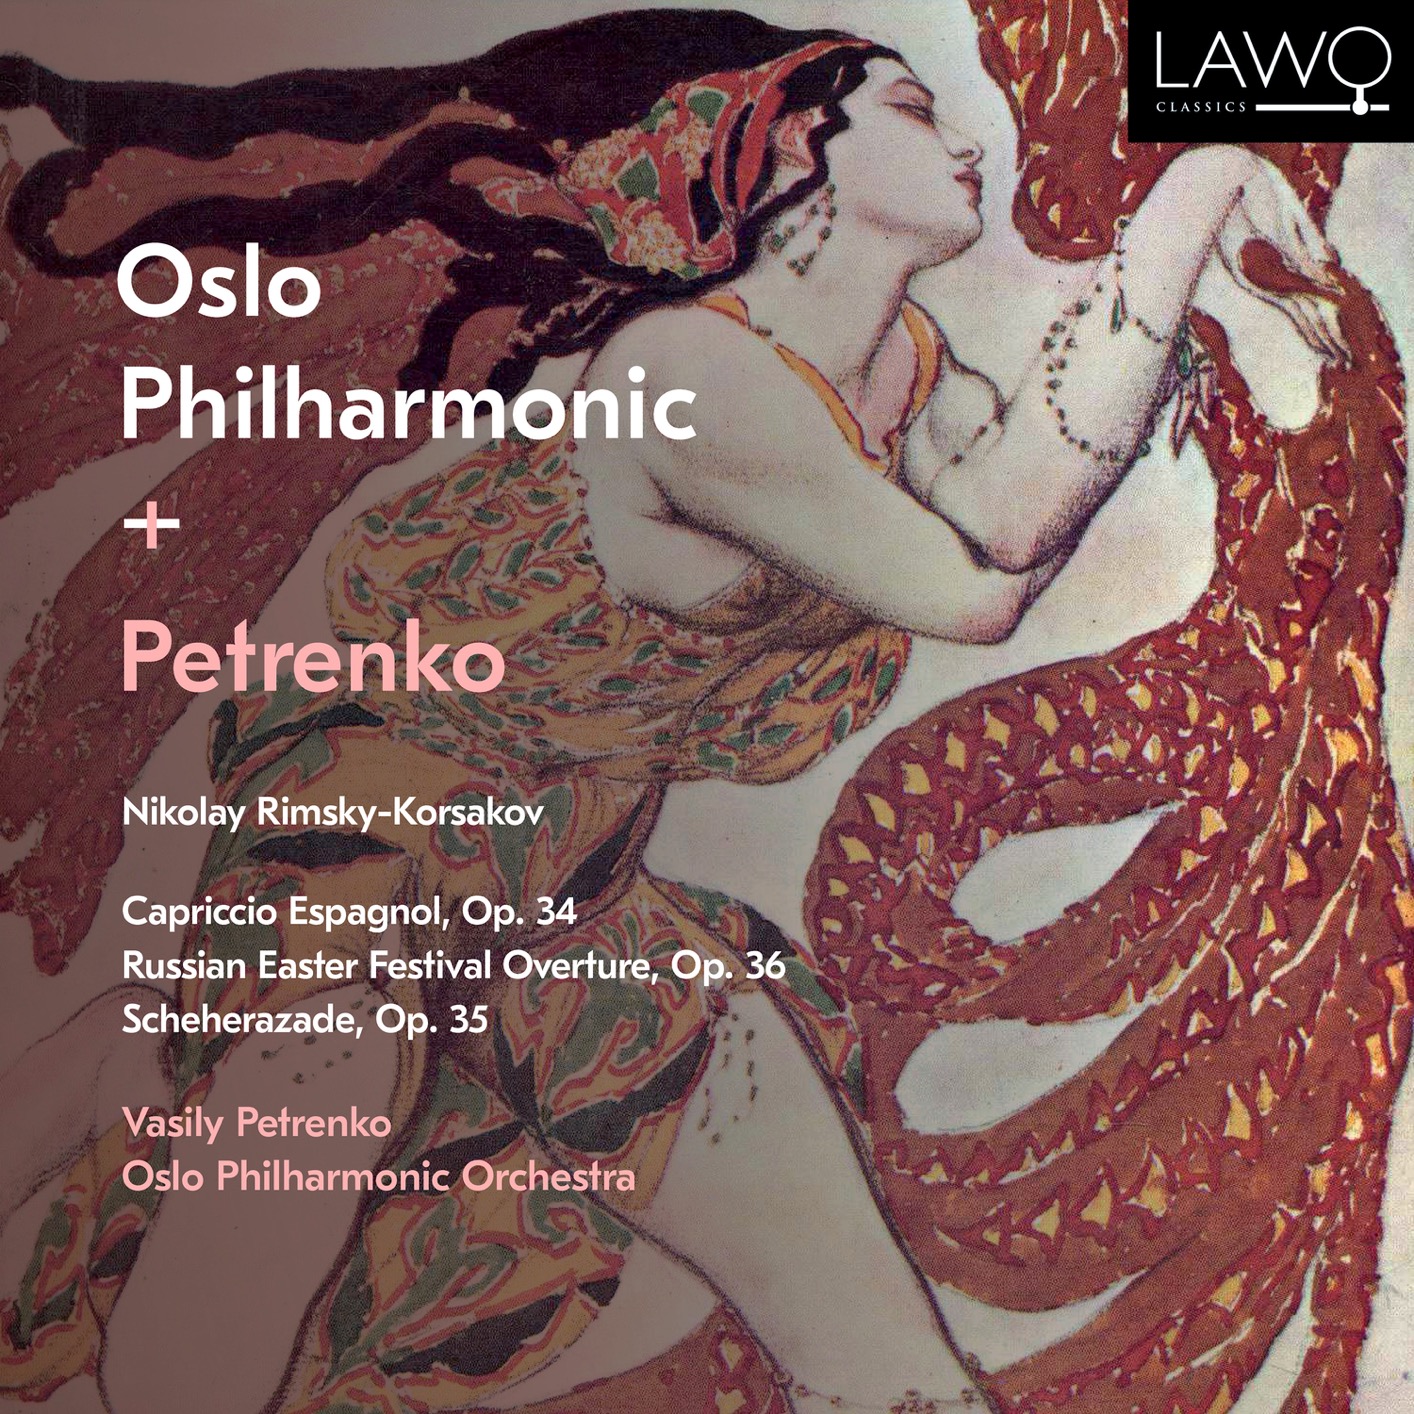 Oslo Philharmonic Orchestra & Vasily Petrenko - Nikolay Rimsky-Korsakov - Op34, Op36, Op35 (2020) [FLAC 24bit/192kHz]